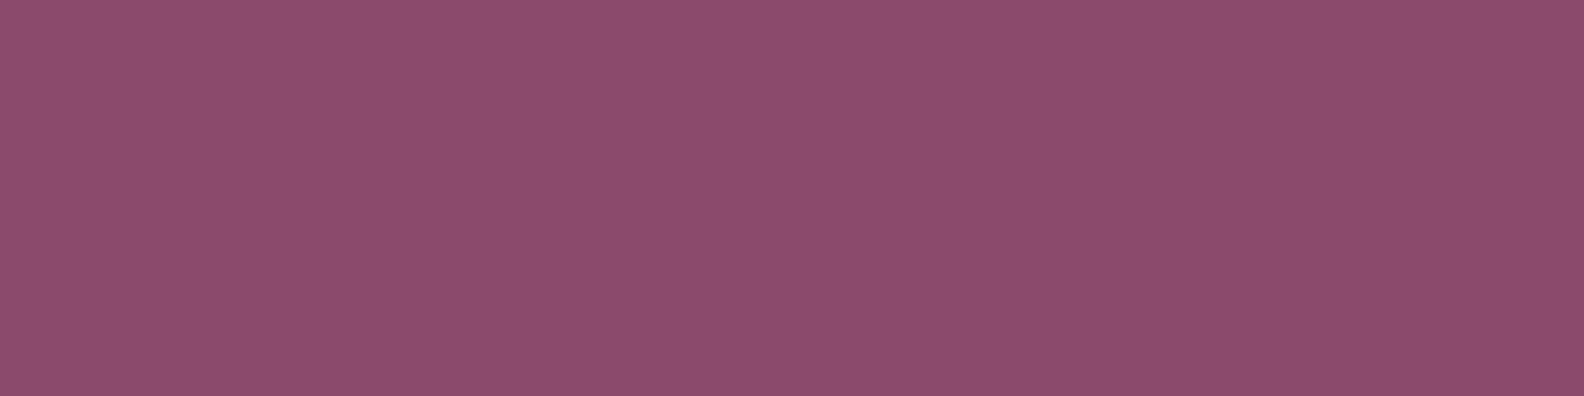 1584x396 Twilight Lavender Solid Color Background